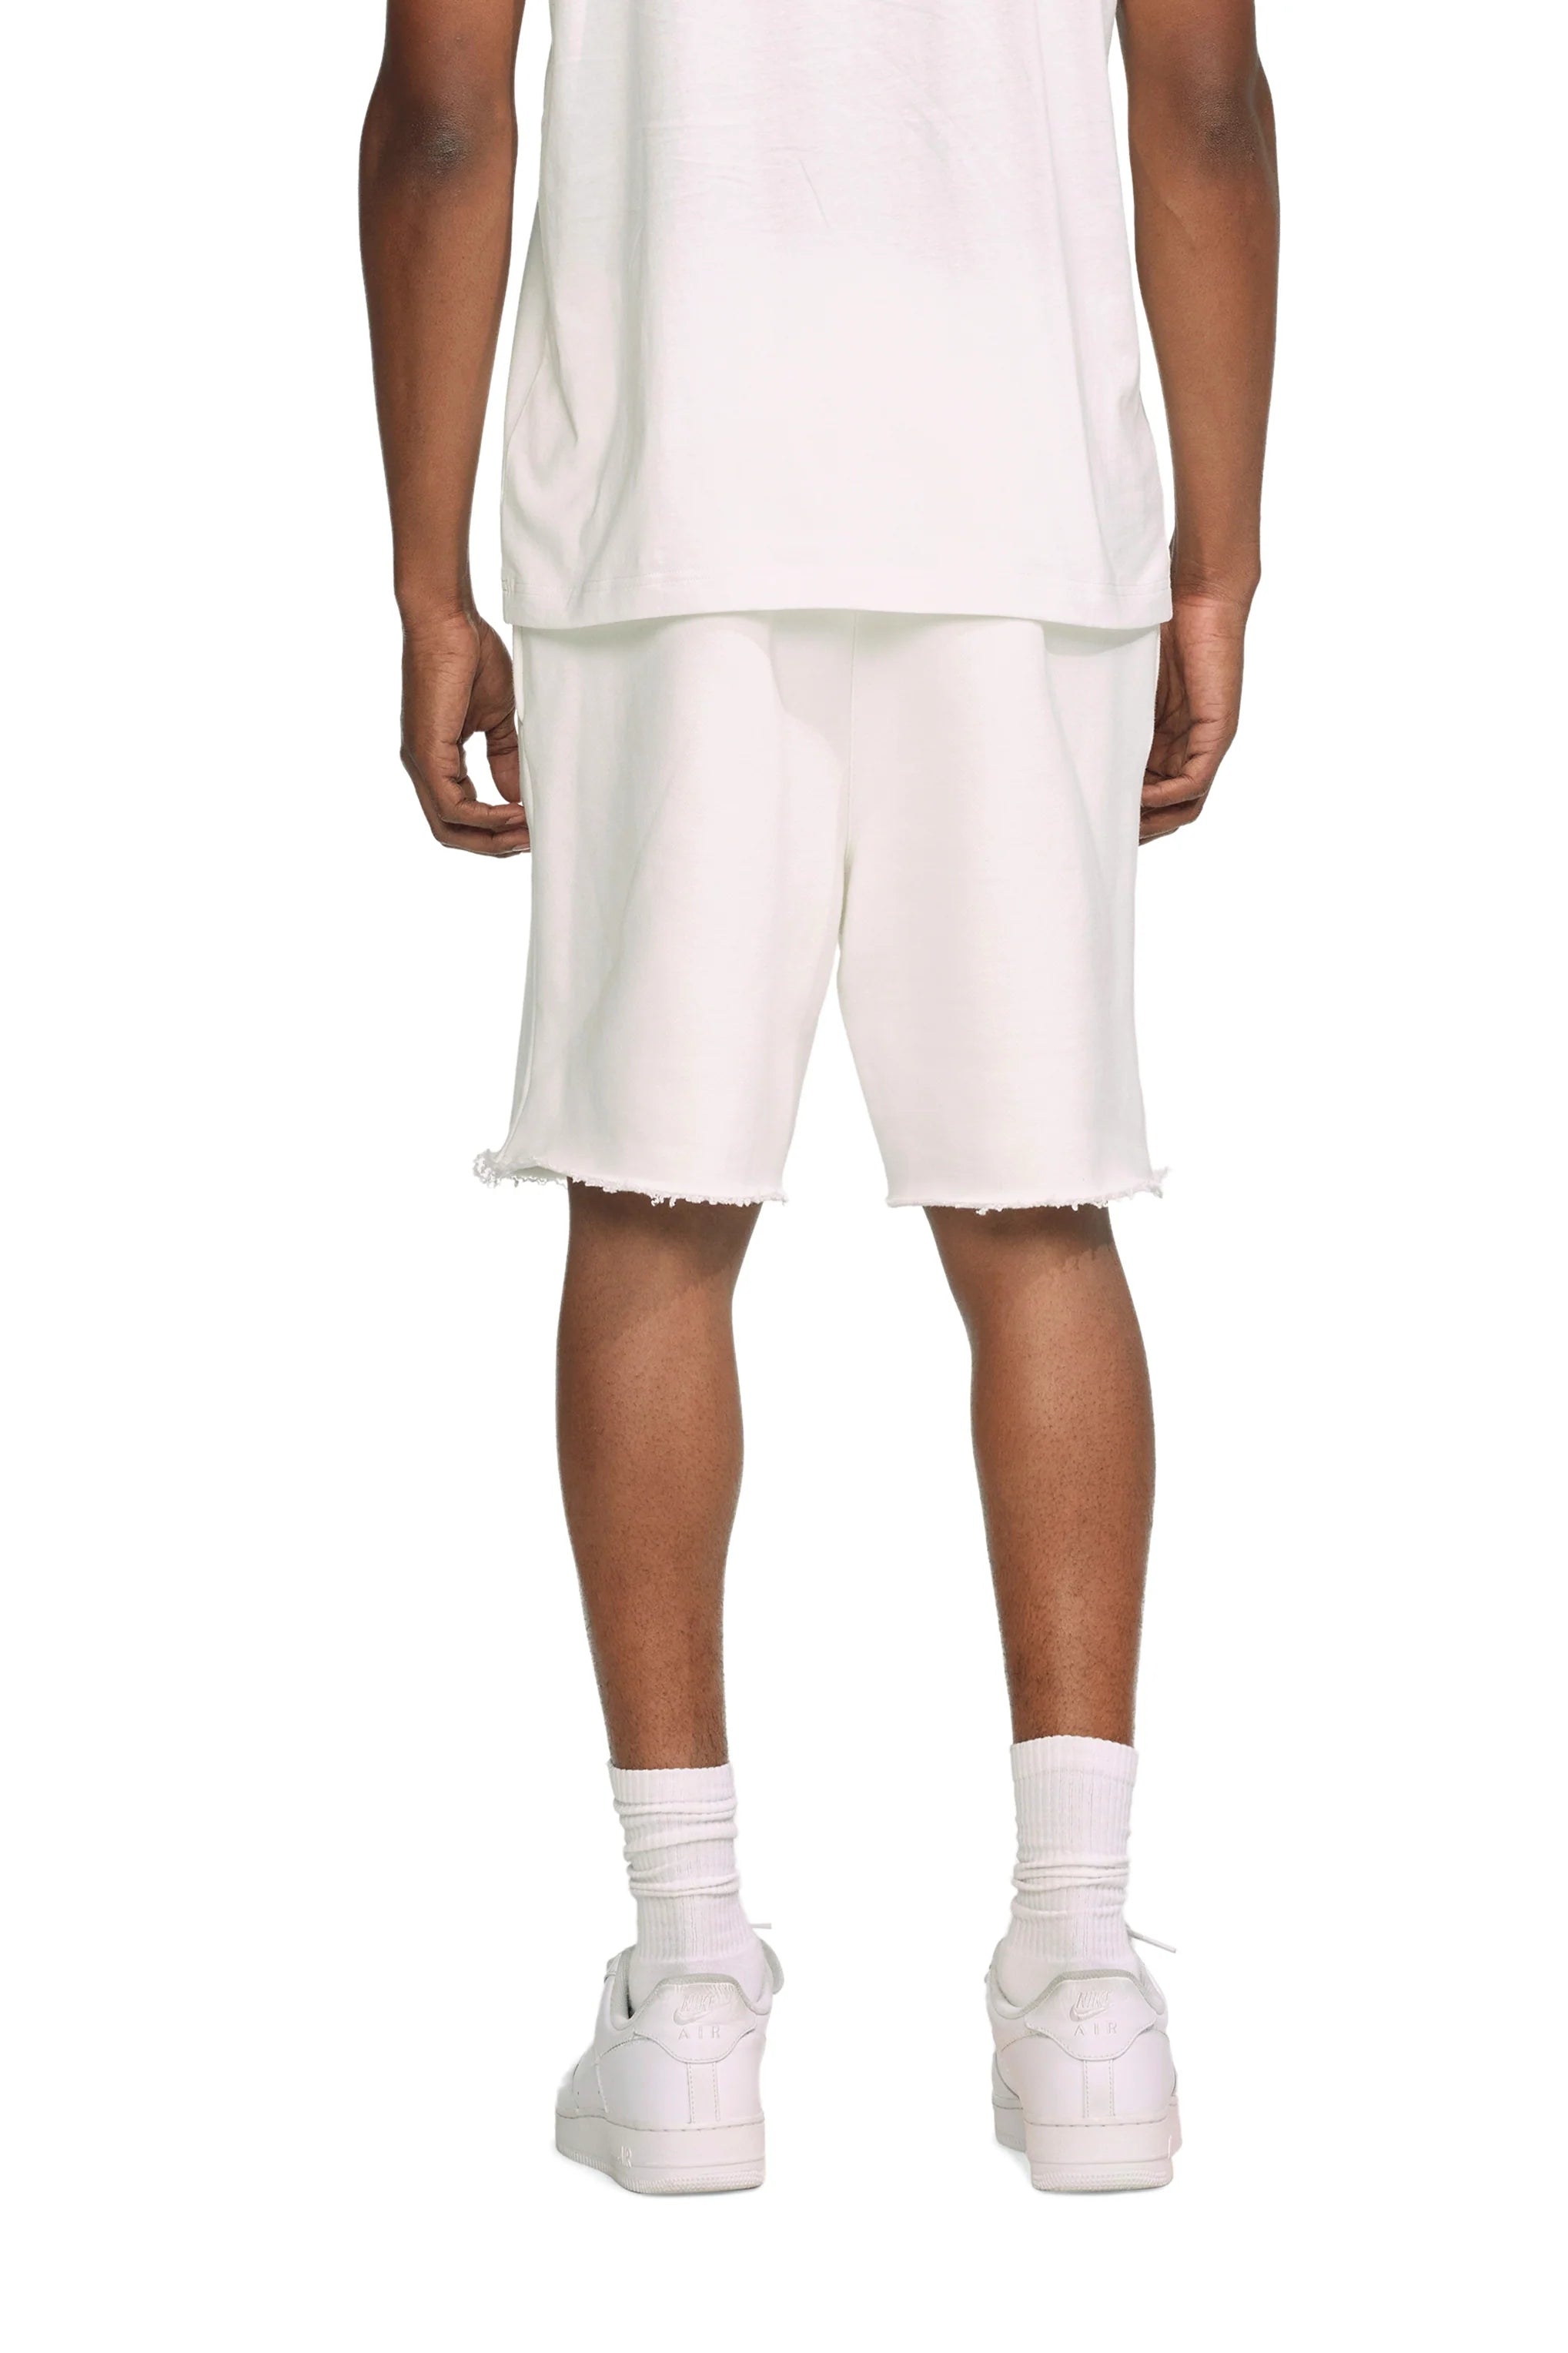 PURPLE BRAND Wordmark Brilliant White Shorts